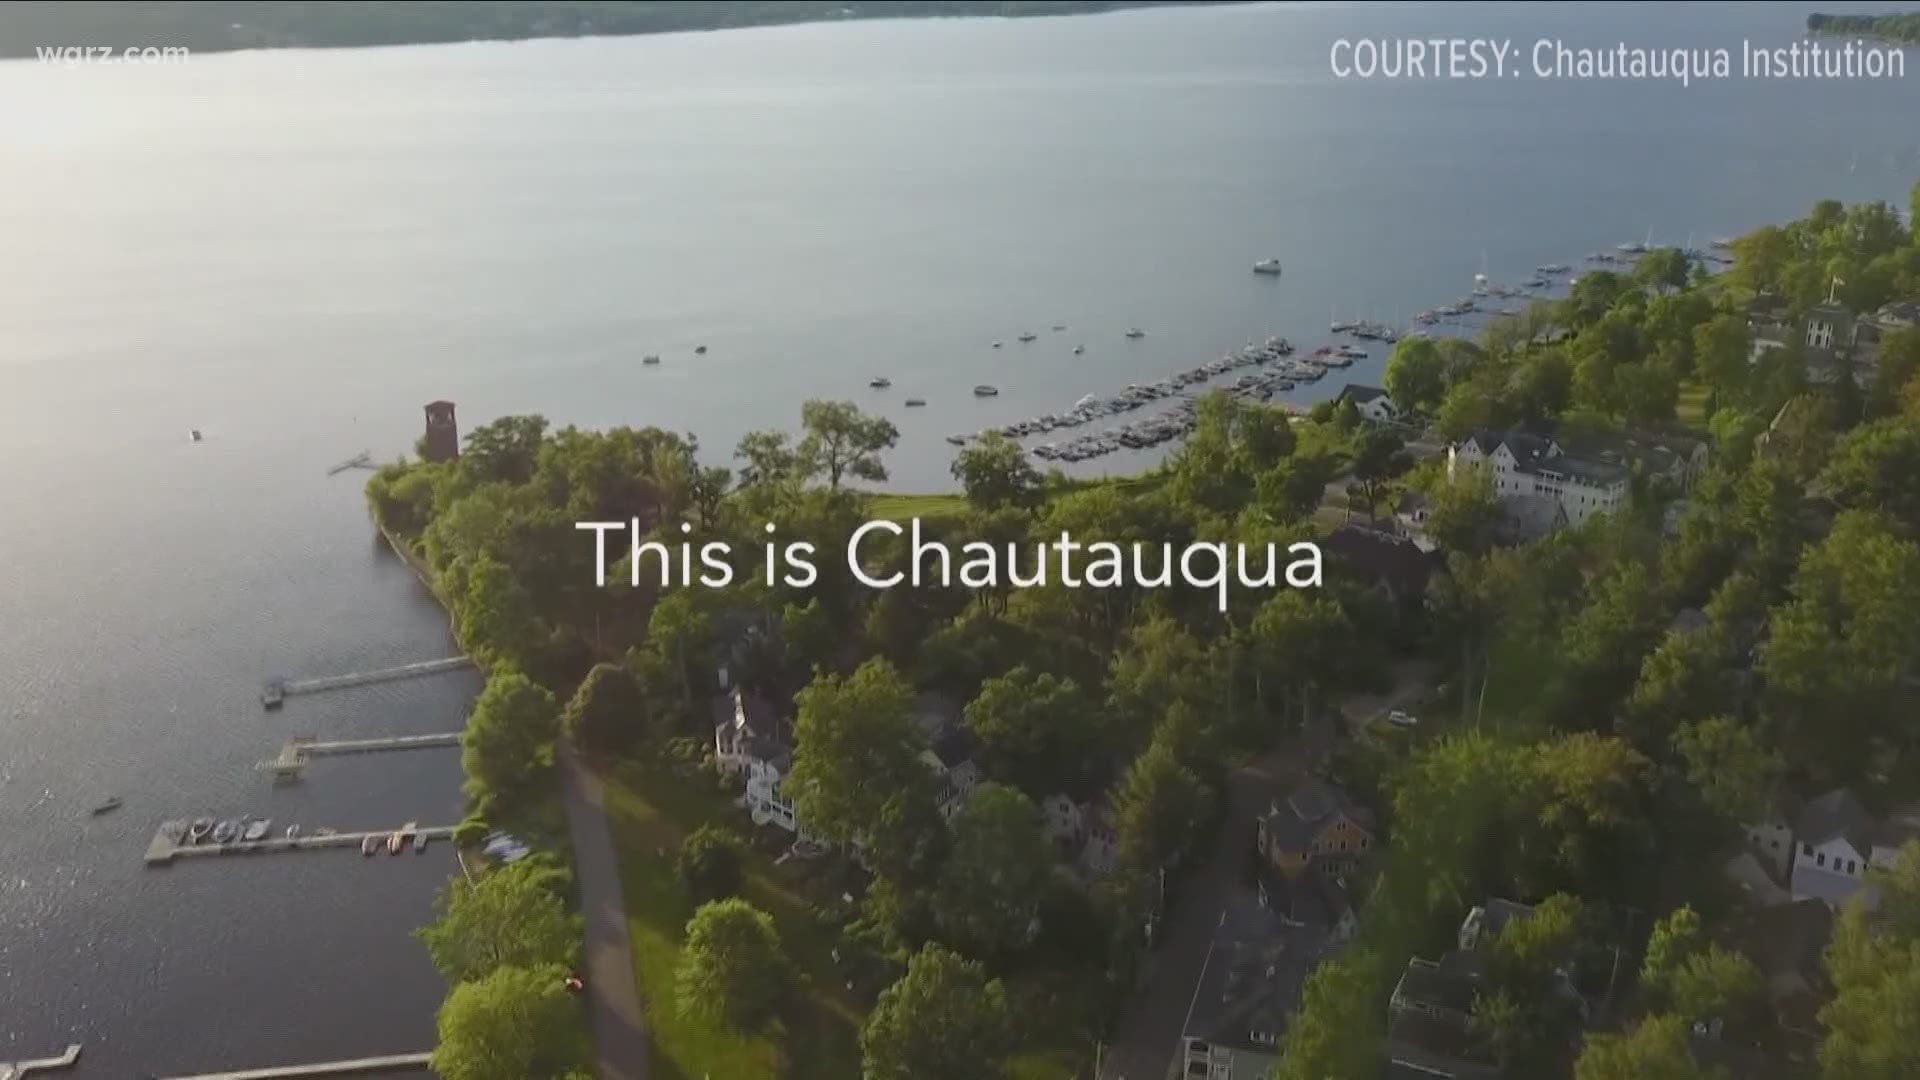 Chautauqua wins USA Today 10 best award